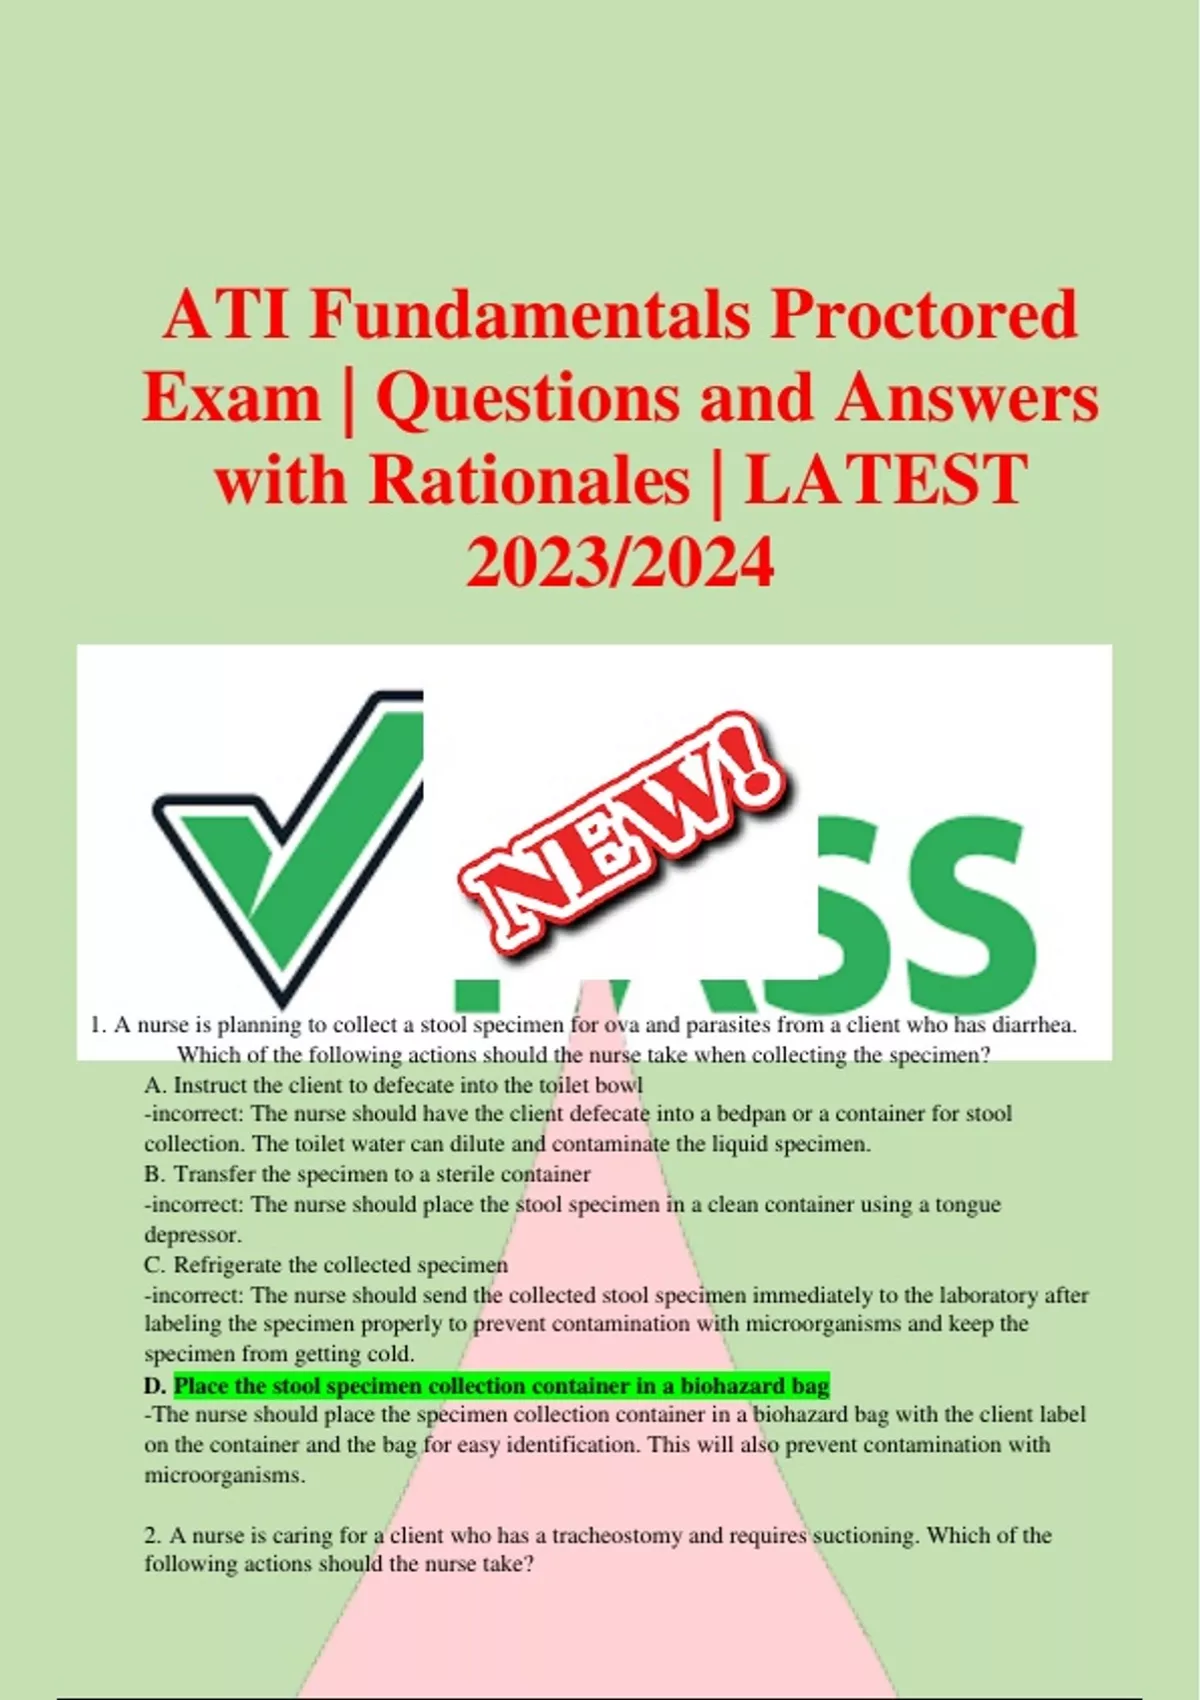 ATI Fundamentals Proctored Exam 2023 Stuvia US